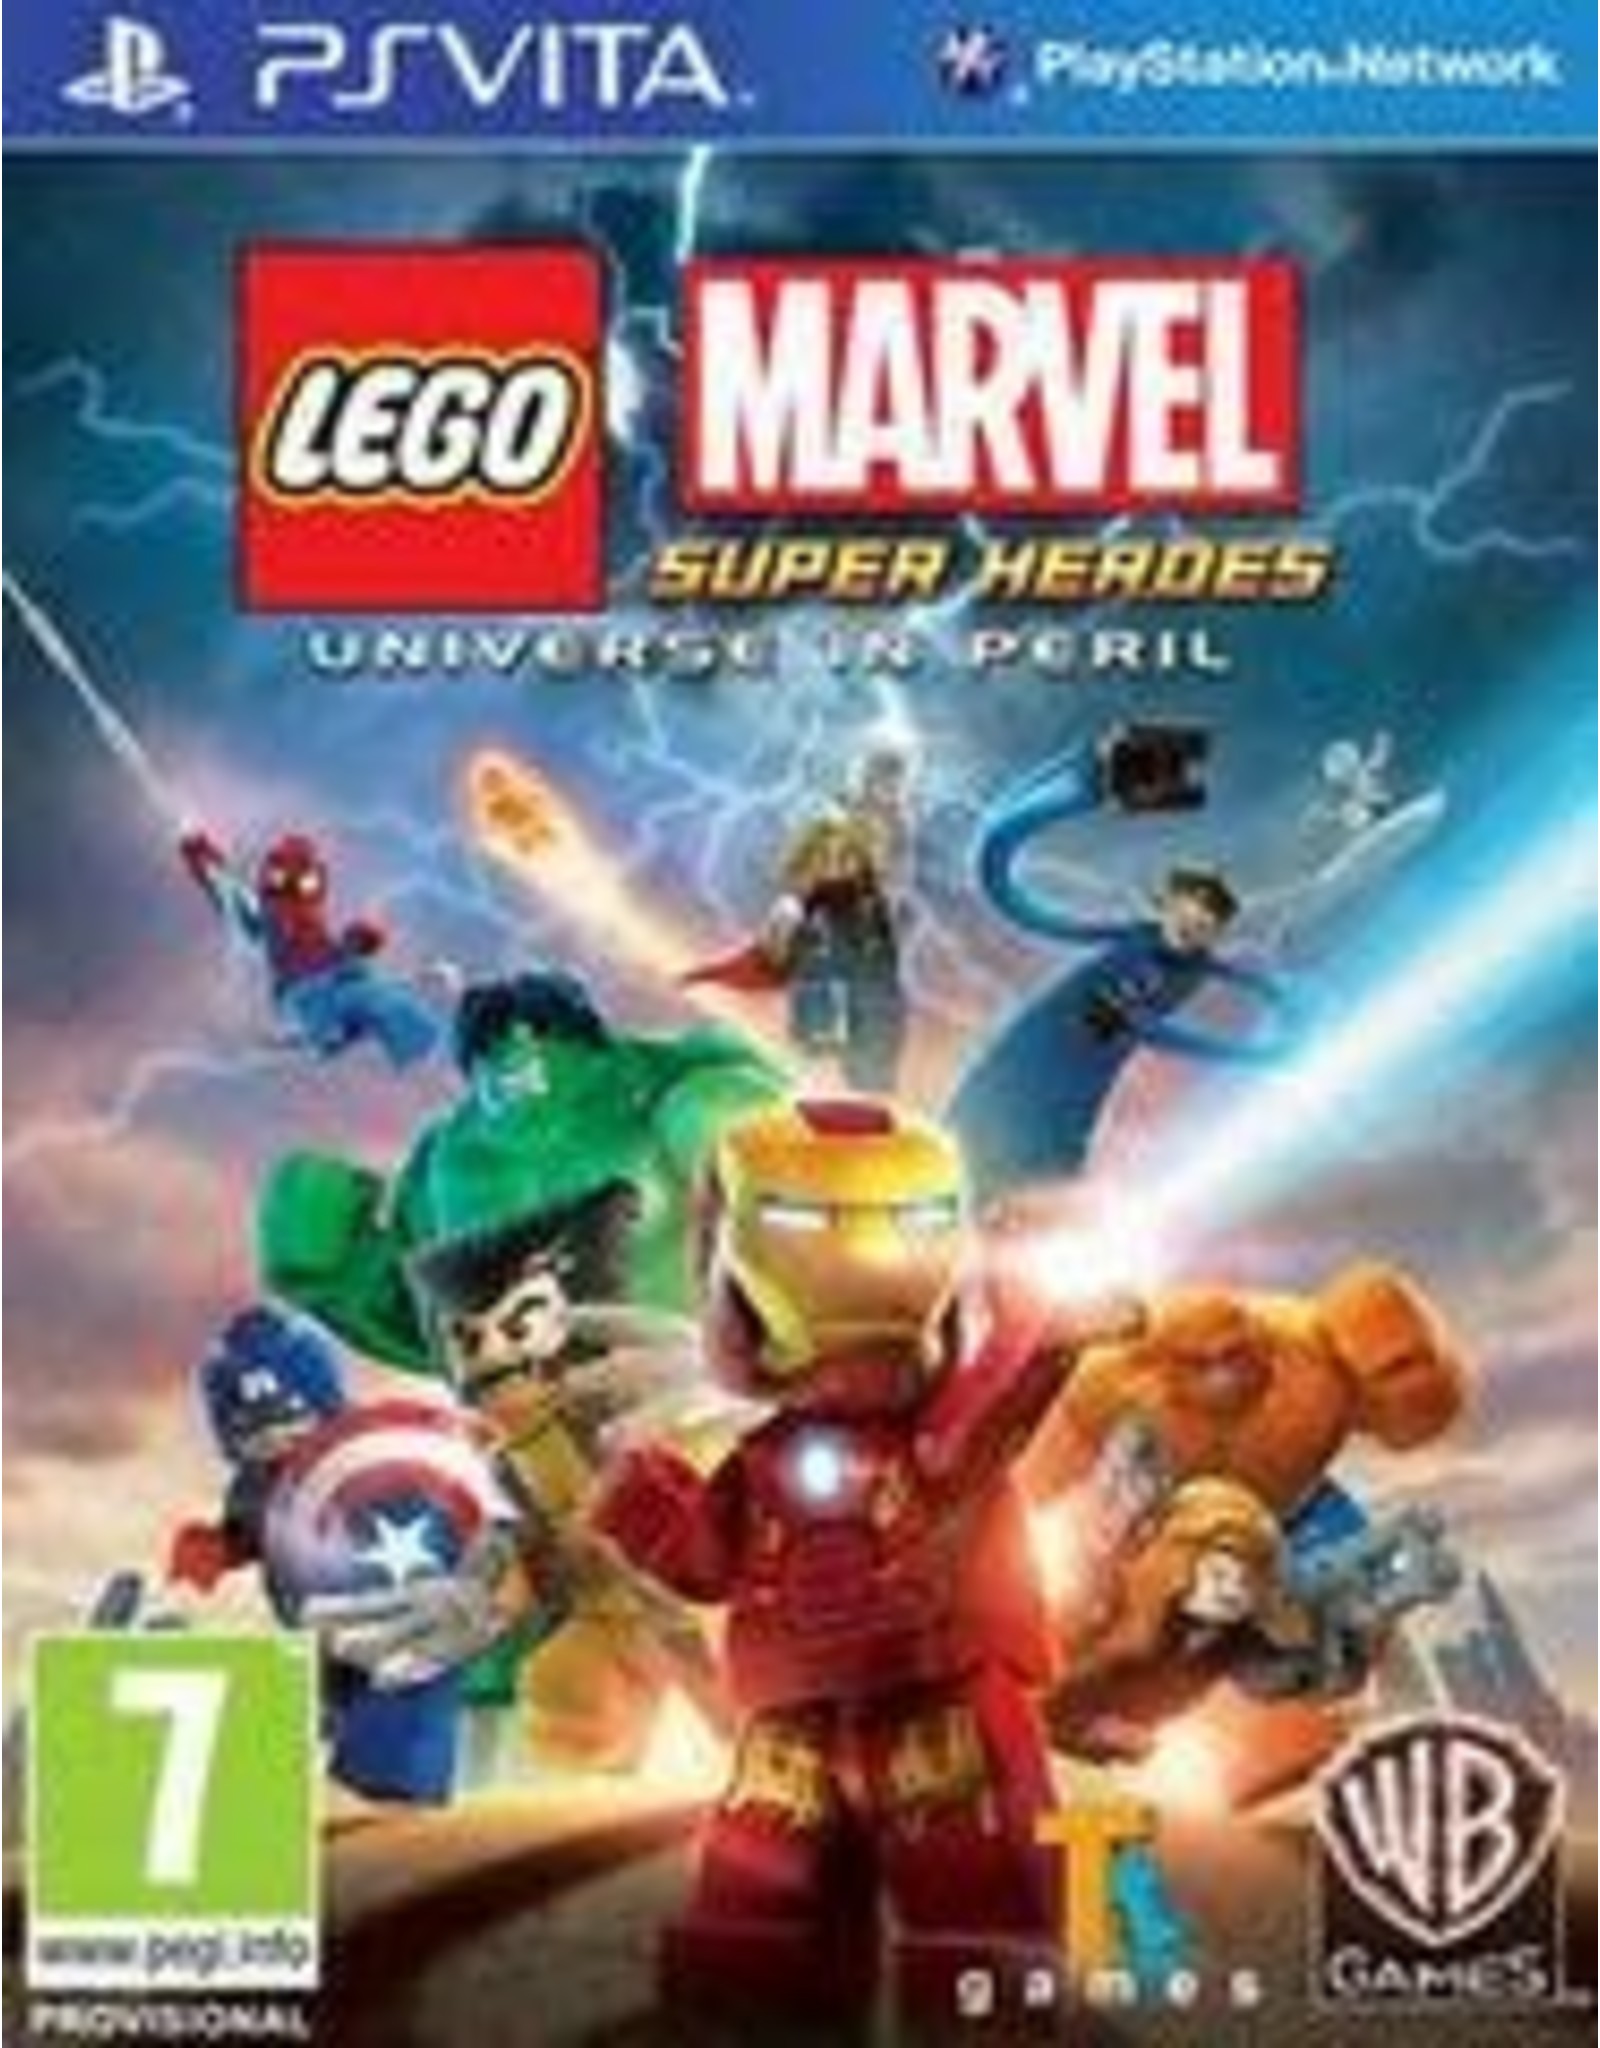 Playstation Vita LEGO Marvel Super Heroes: Universe in Peril (CiB, PAL Import)